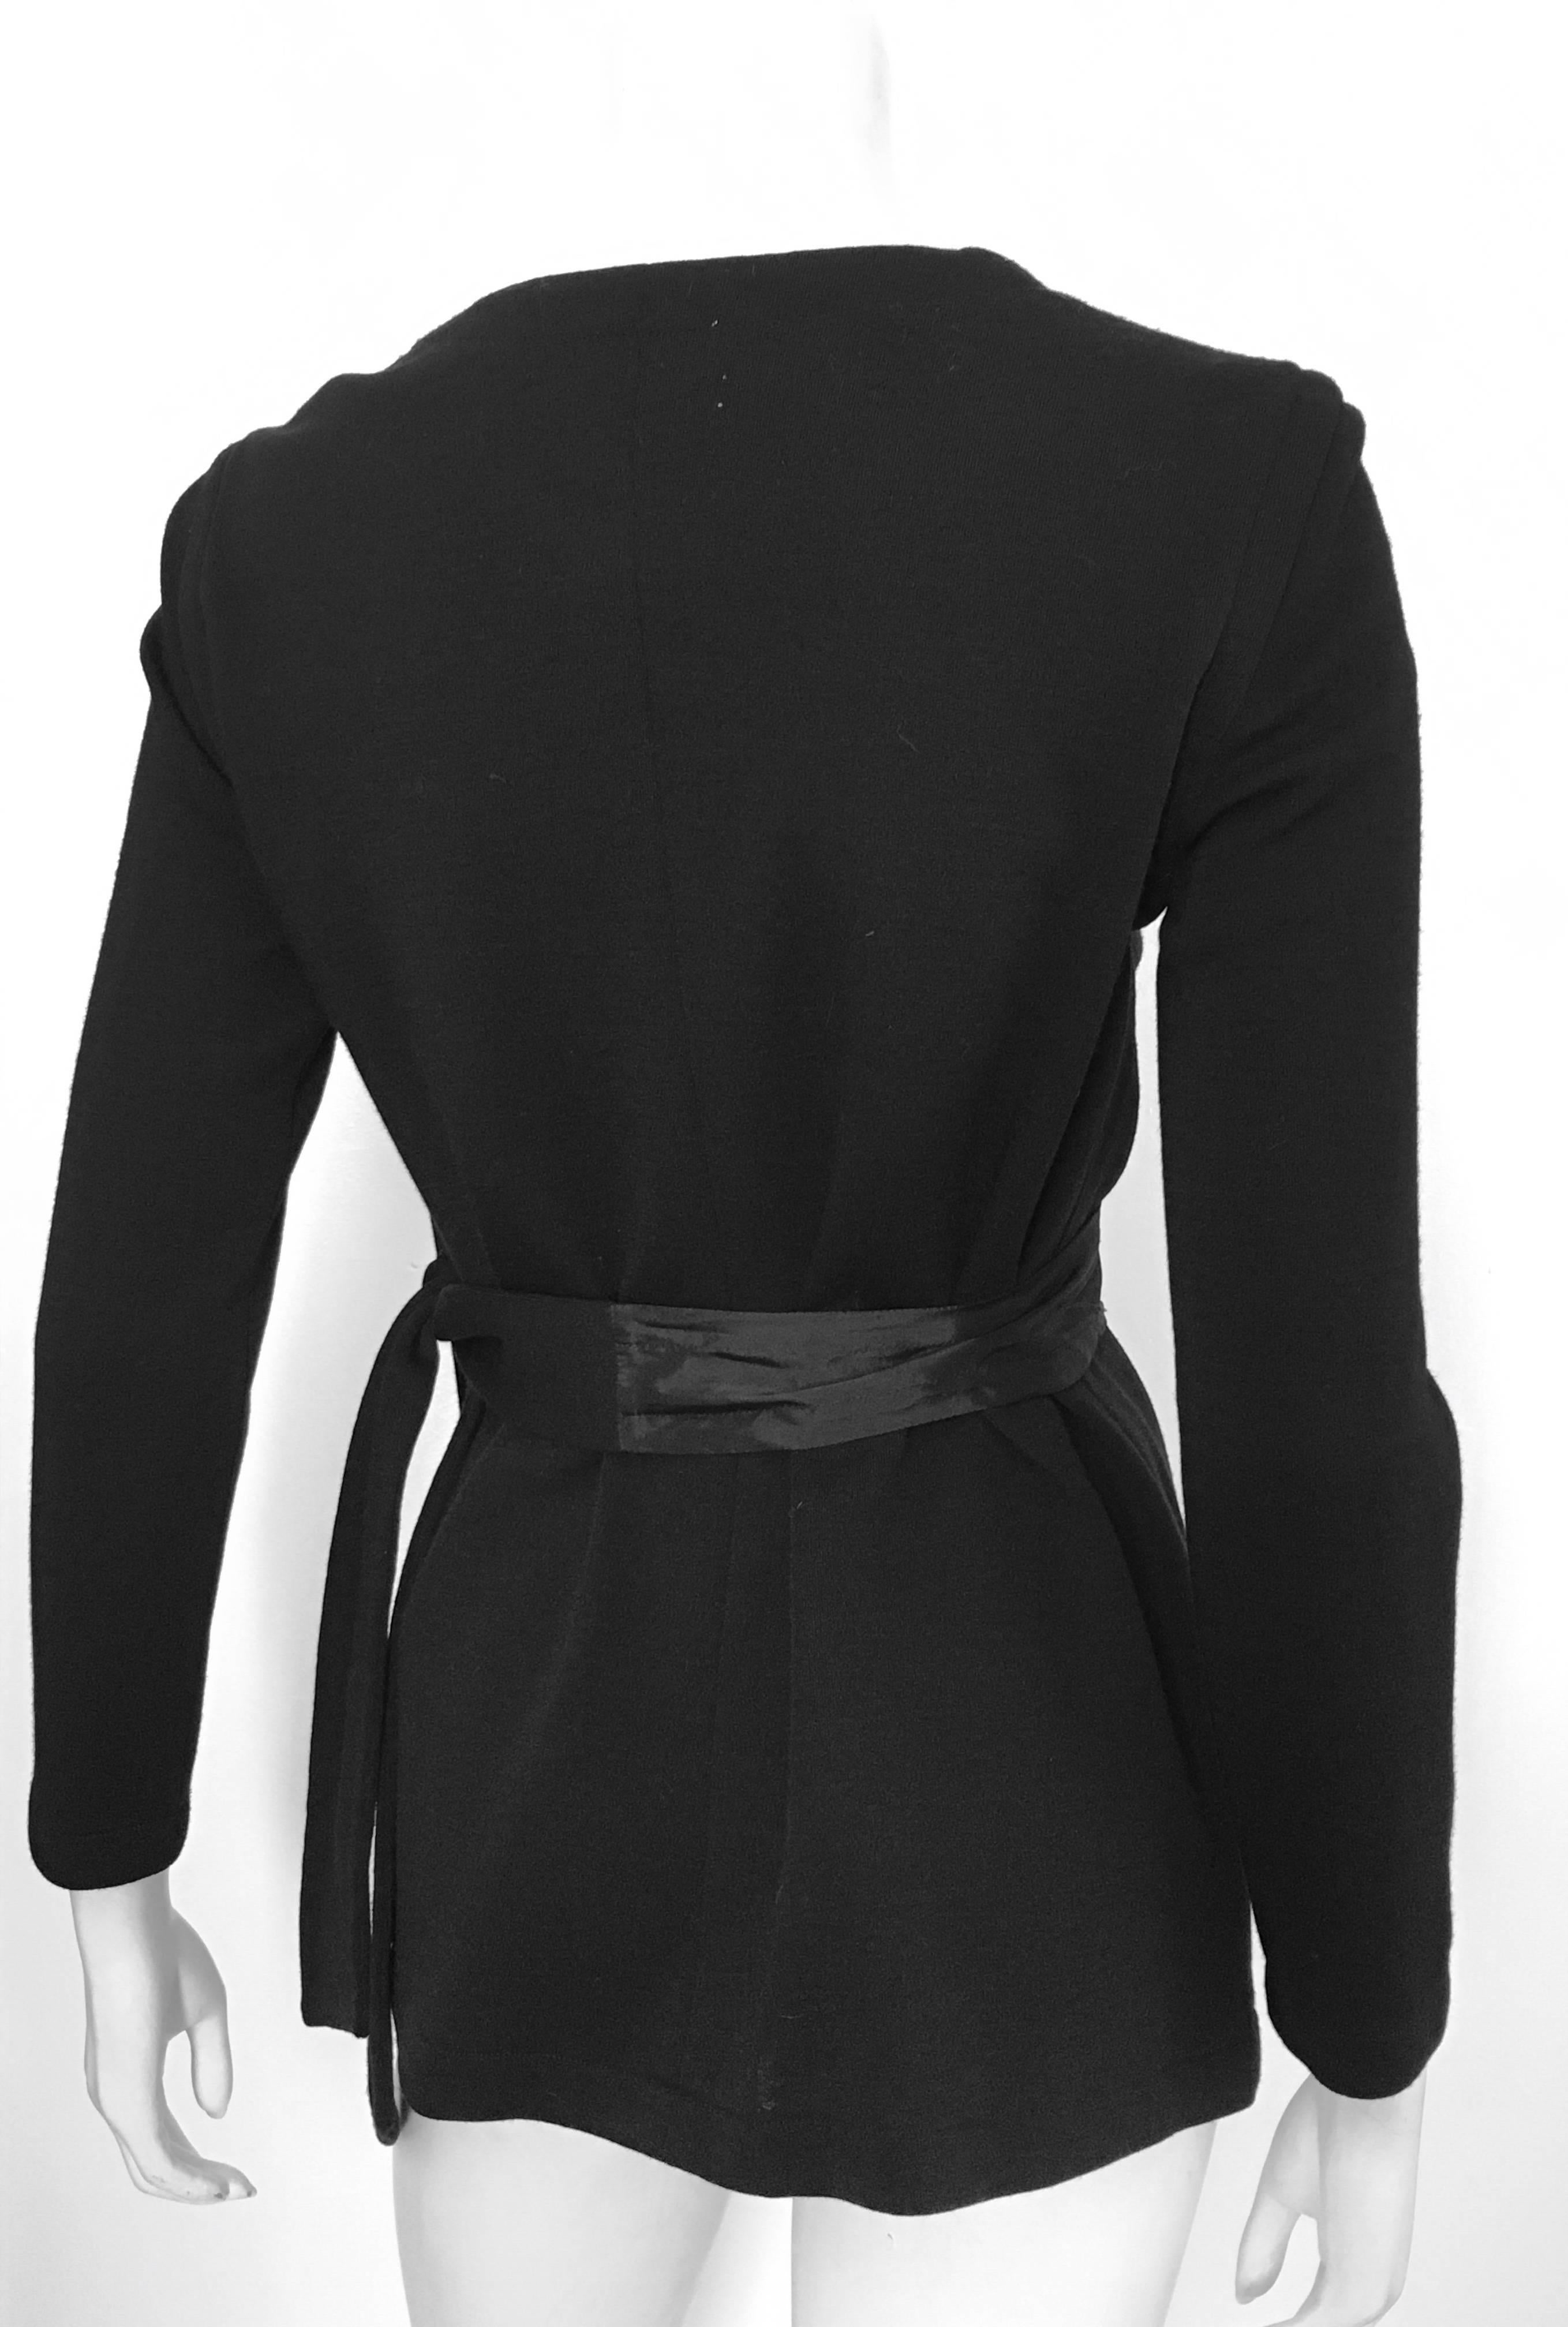 Tom and Linda Platt for Saks Fifth Avenue 1980s Black Wrap Jacket Size Petite. For Sale 1